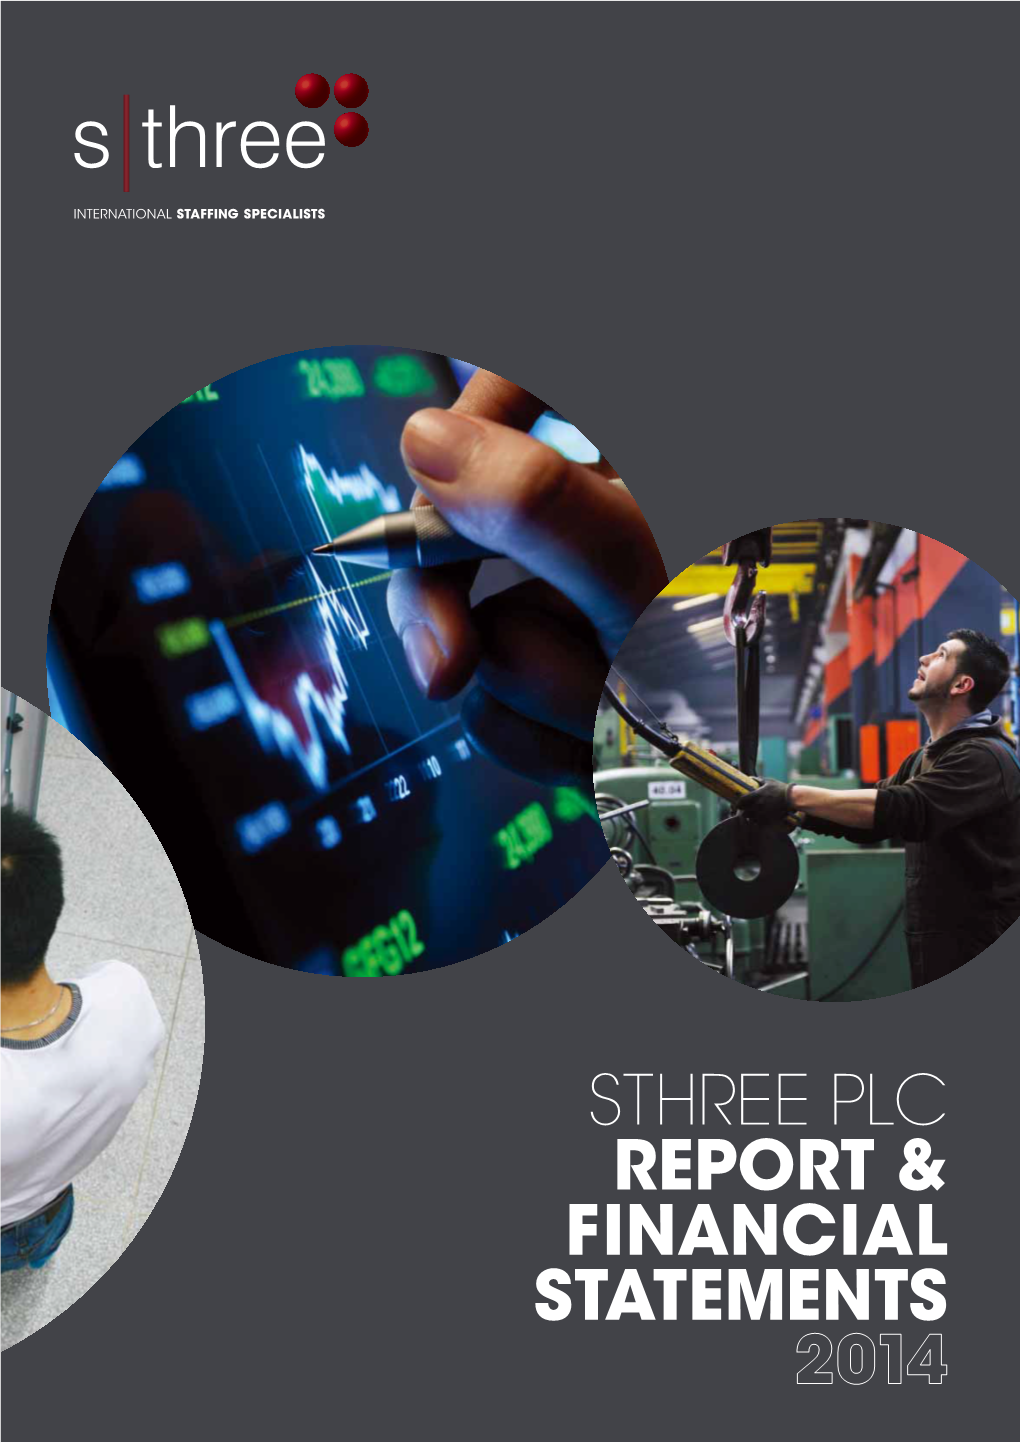 Sthree Plc Report & Financial Statements